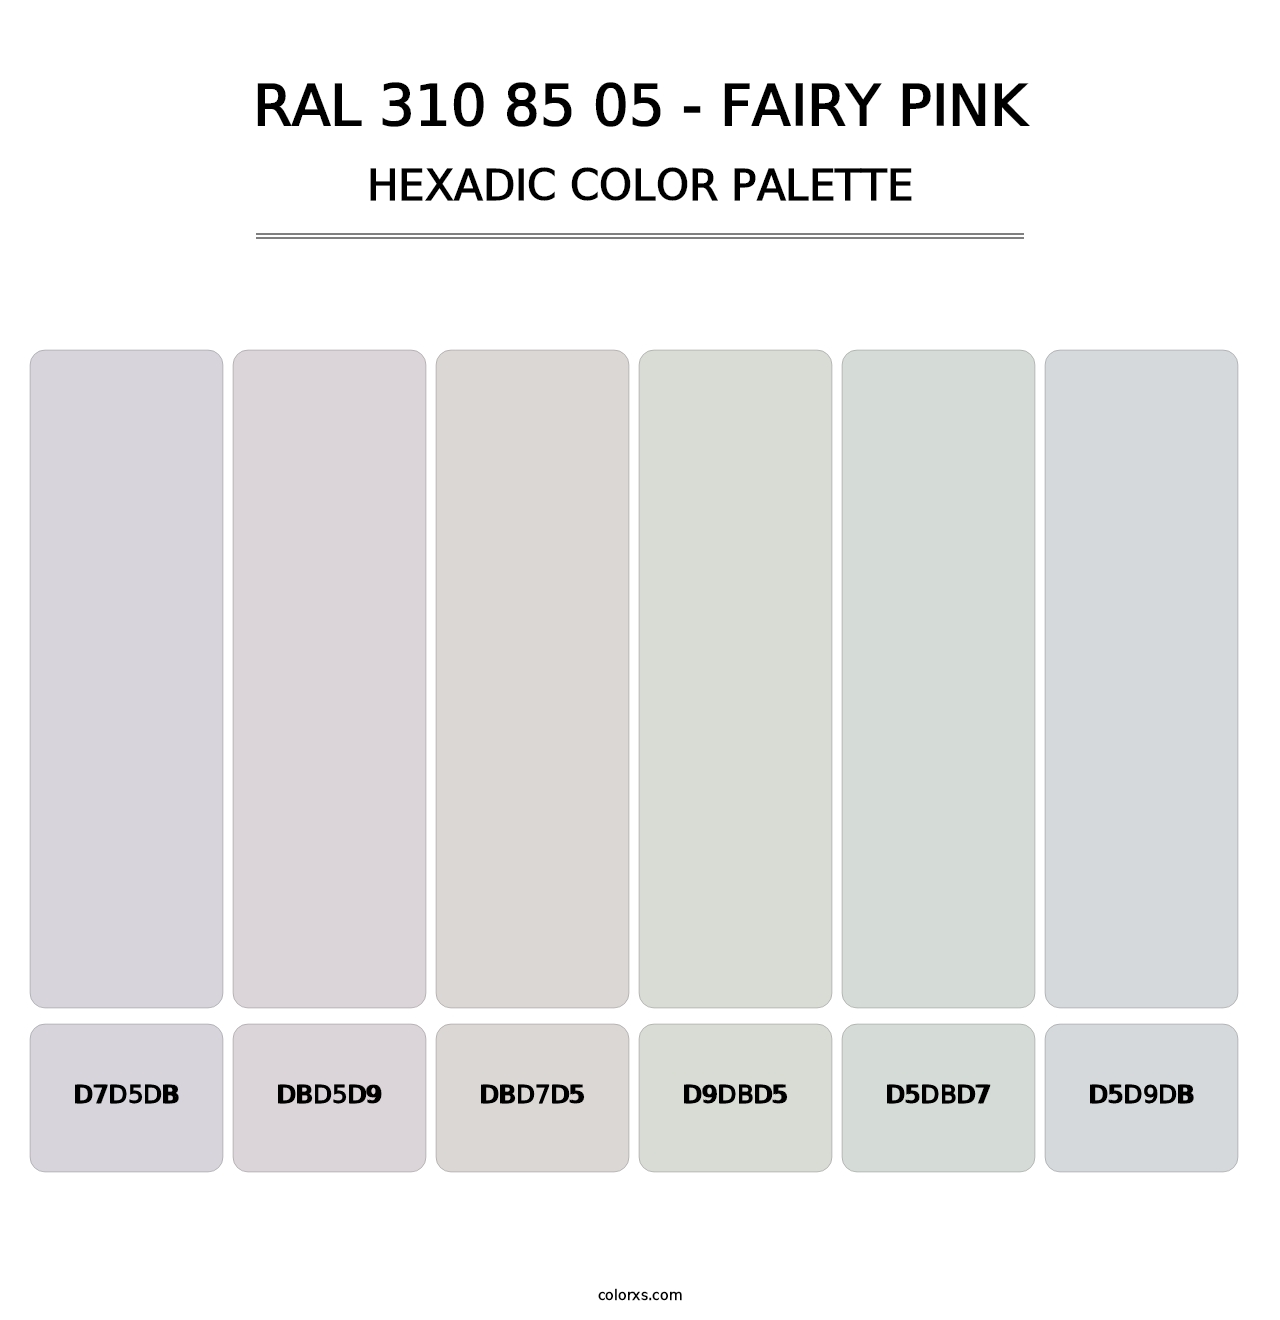 RAL 310 85 05 - Fairy Pink - Hexadic Color Palette